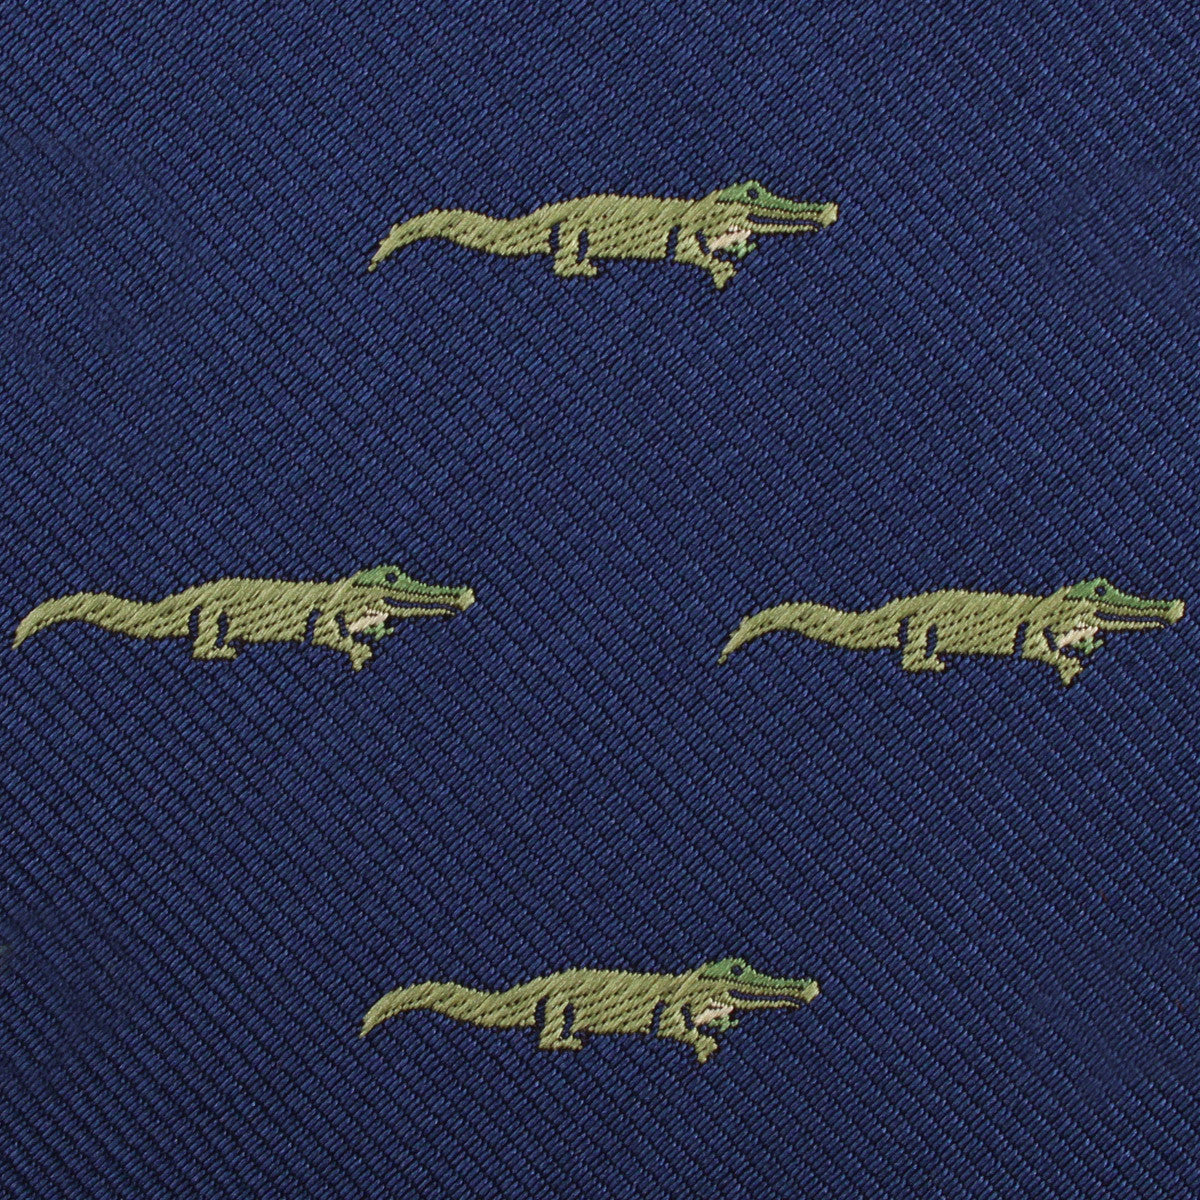 Saltwater Crocodile Fabric Skinny Tie